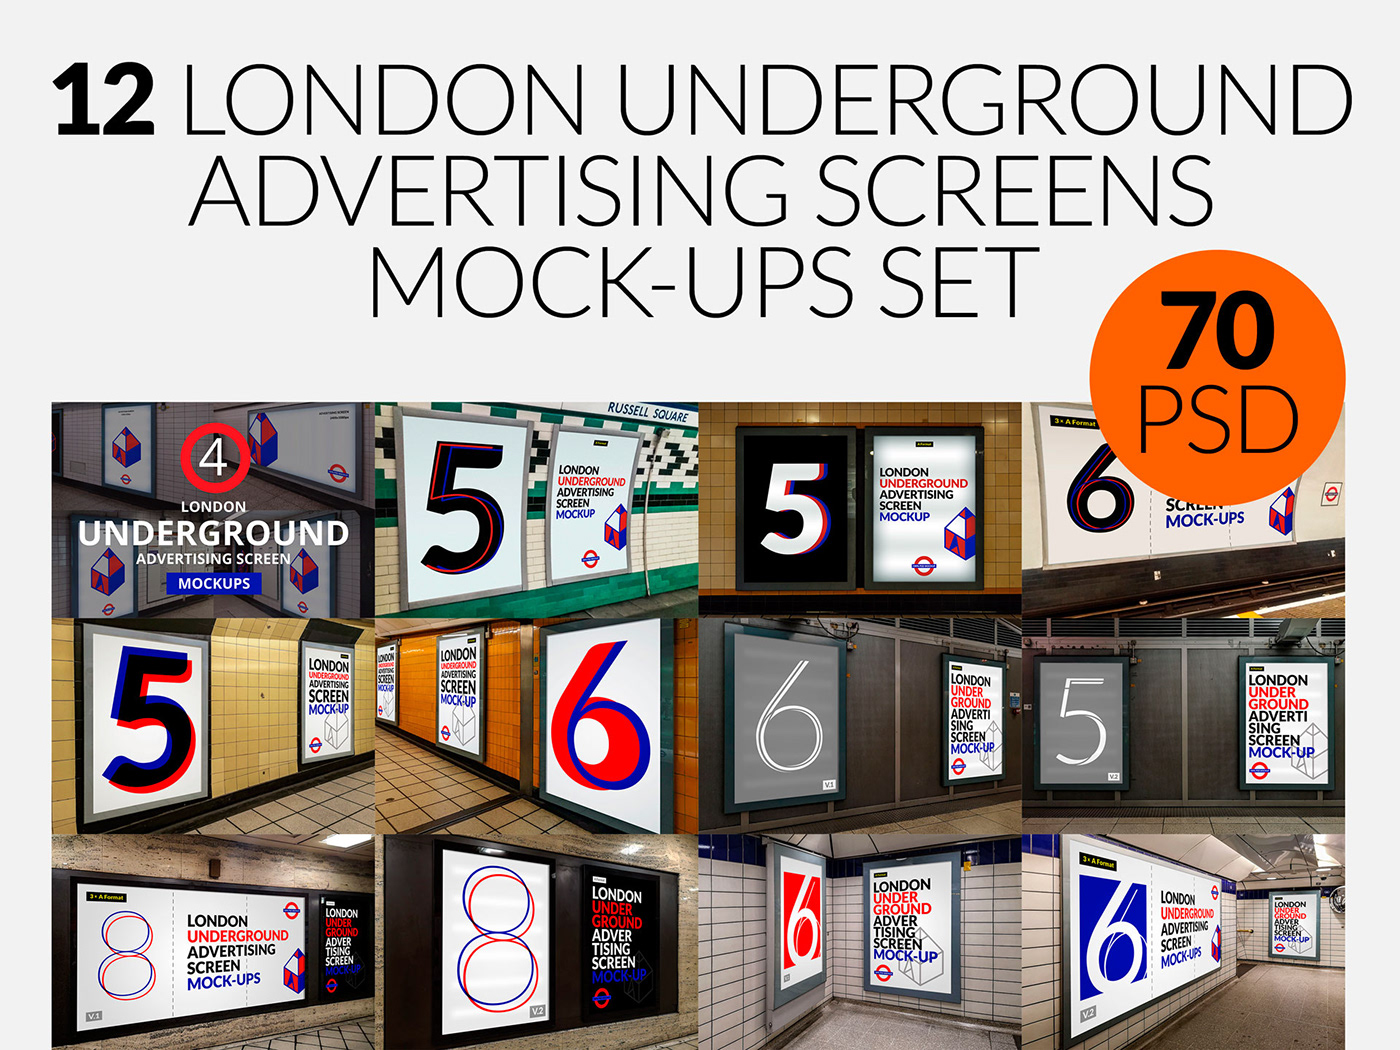 Mockup mock-up London underground tube metro poster screen subway advertisement